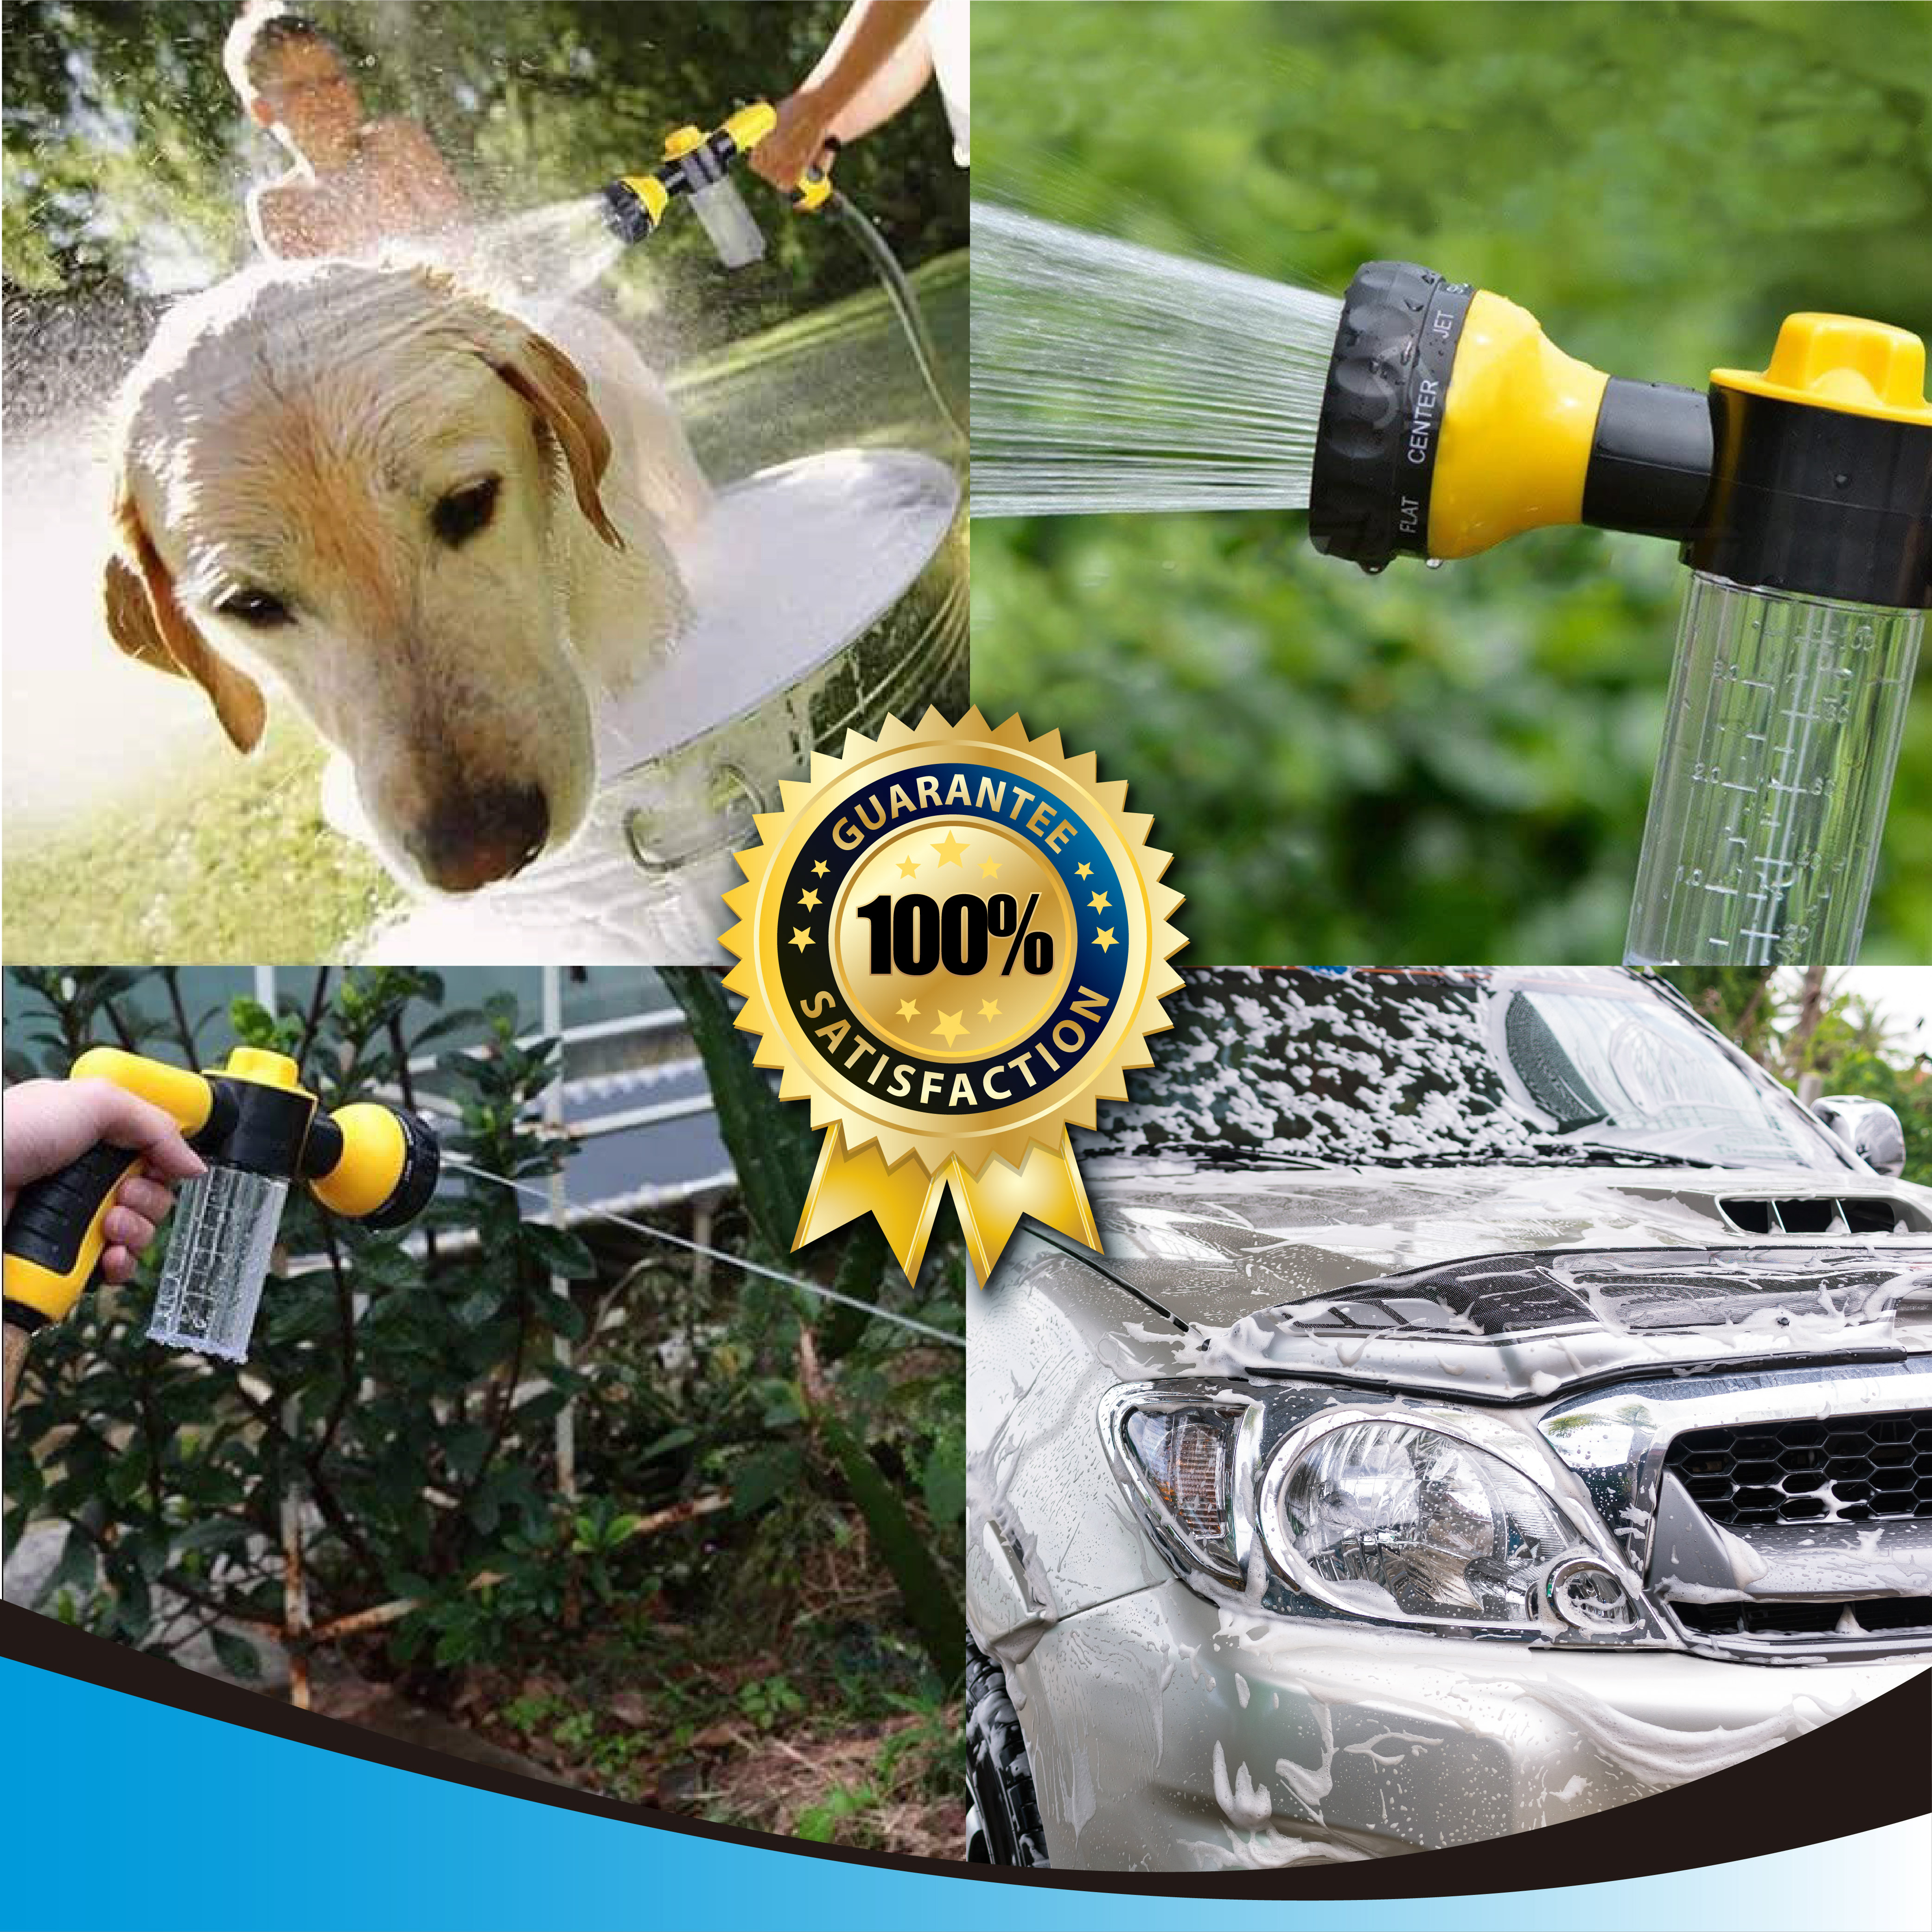 LoboJack Foam Sprayer Gun, Pressure Nozzle for Car Wash, Watering Plants, Pet Shower, Outdoor Fun - 8 Watering Patterns and Soap Dispenser, Yellow